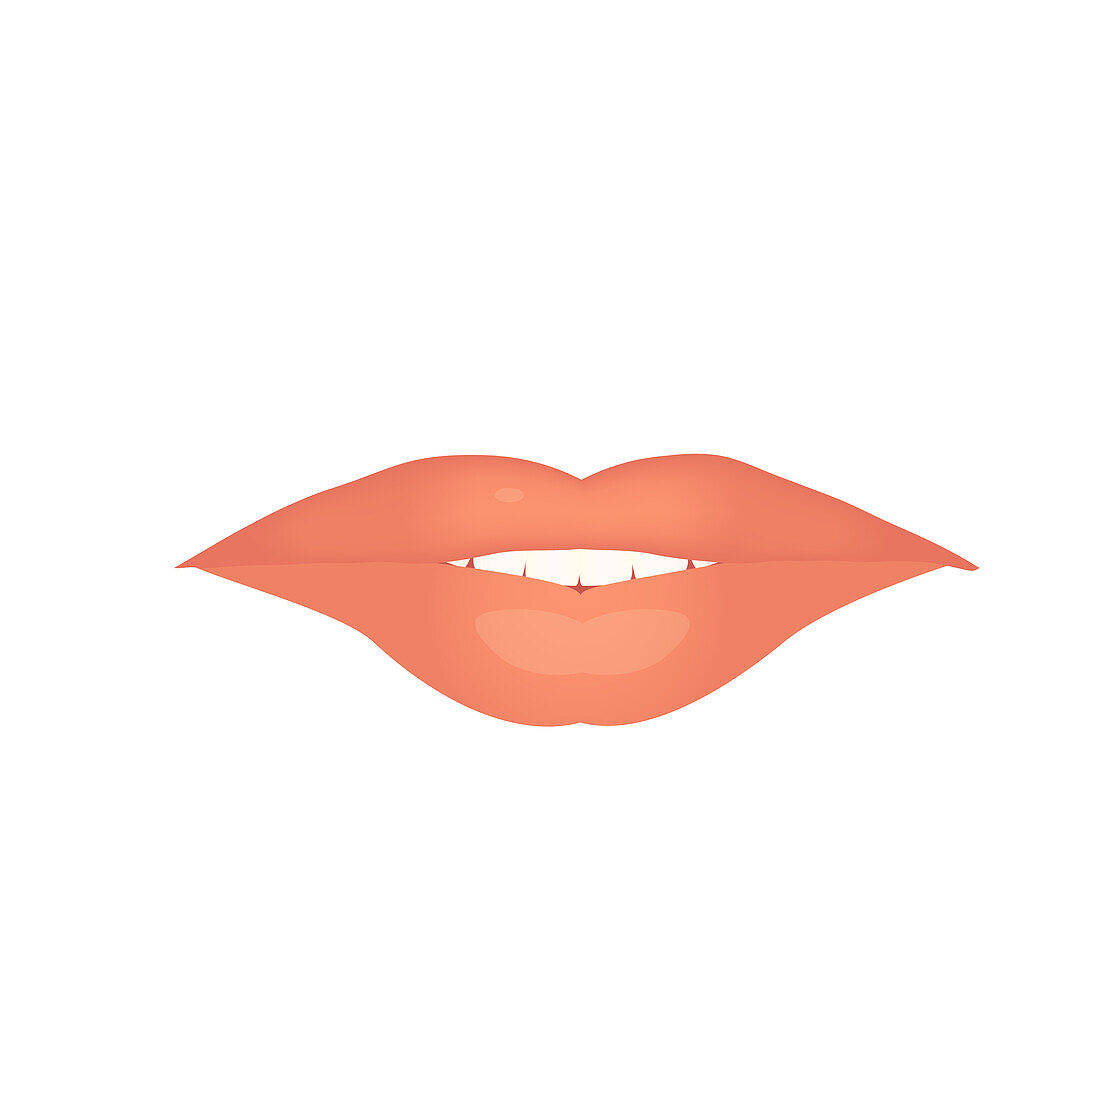 Lips, illustration